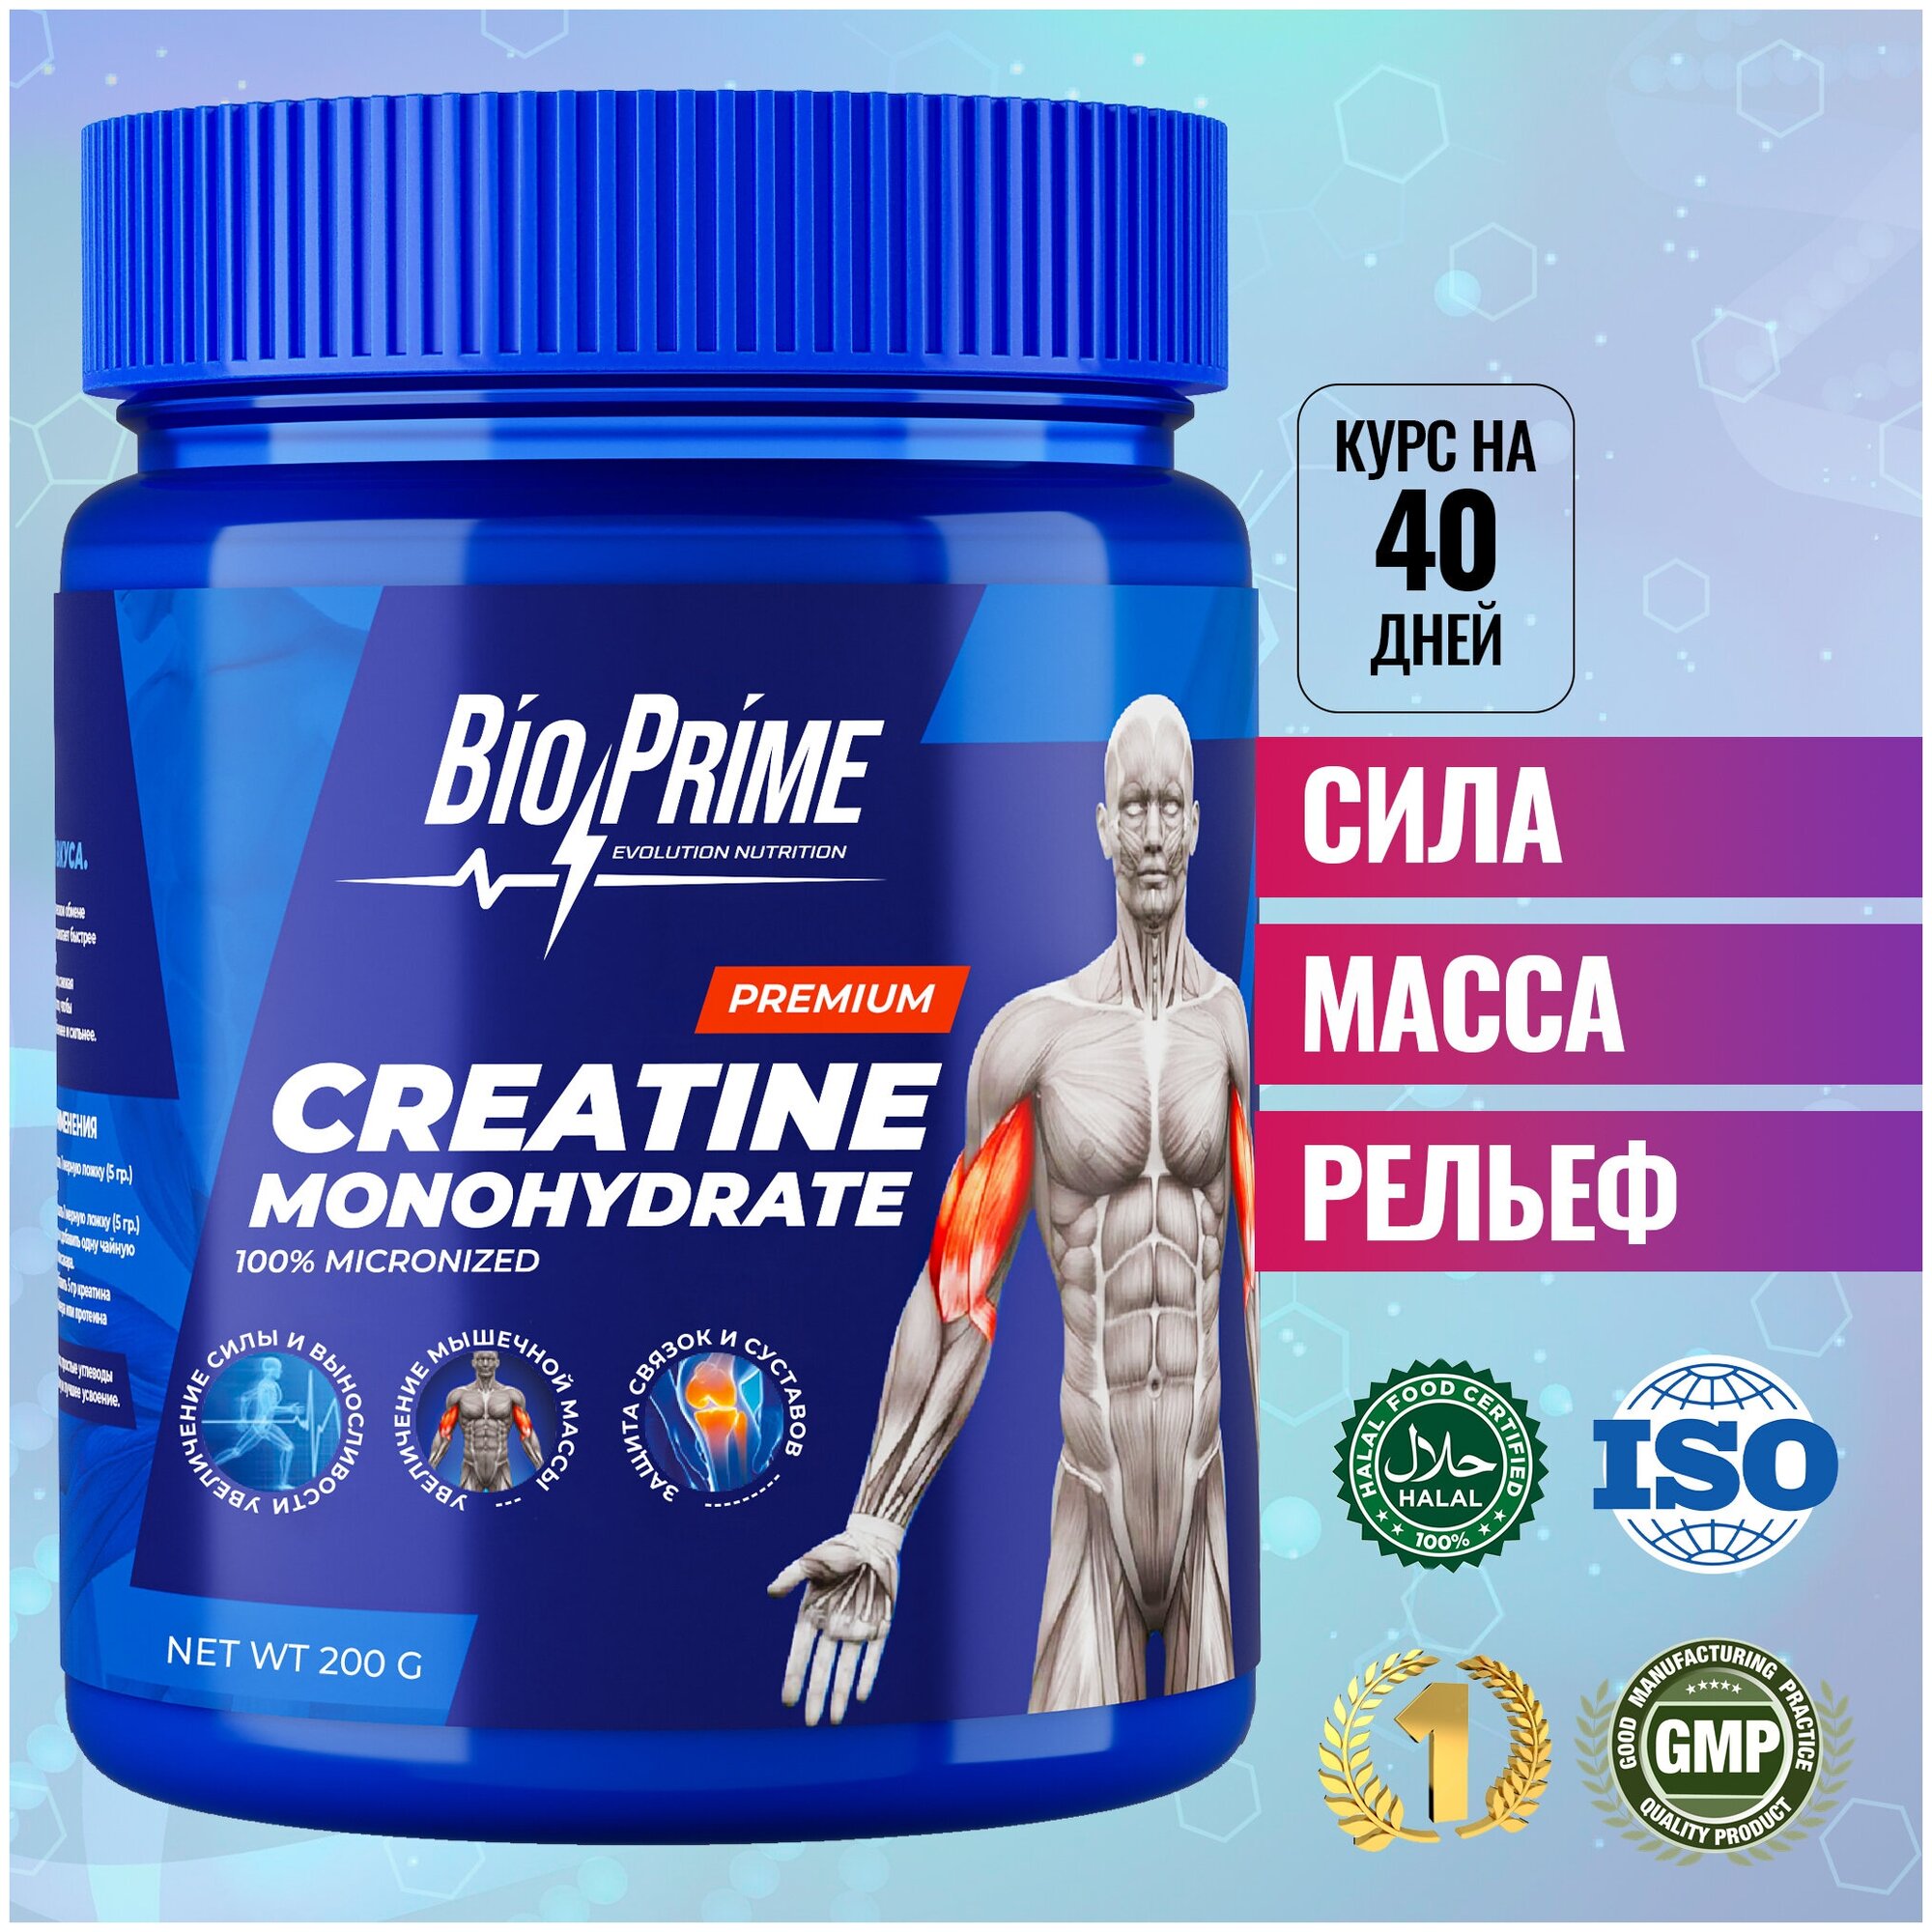 Креатин моногидрат BioPrime порошок Premium Creatine Monohydrate Micronized Powder для набора массы и роста мышц Pure (Без Вкуса) банка 200 гр.